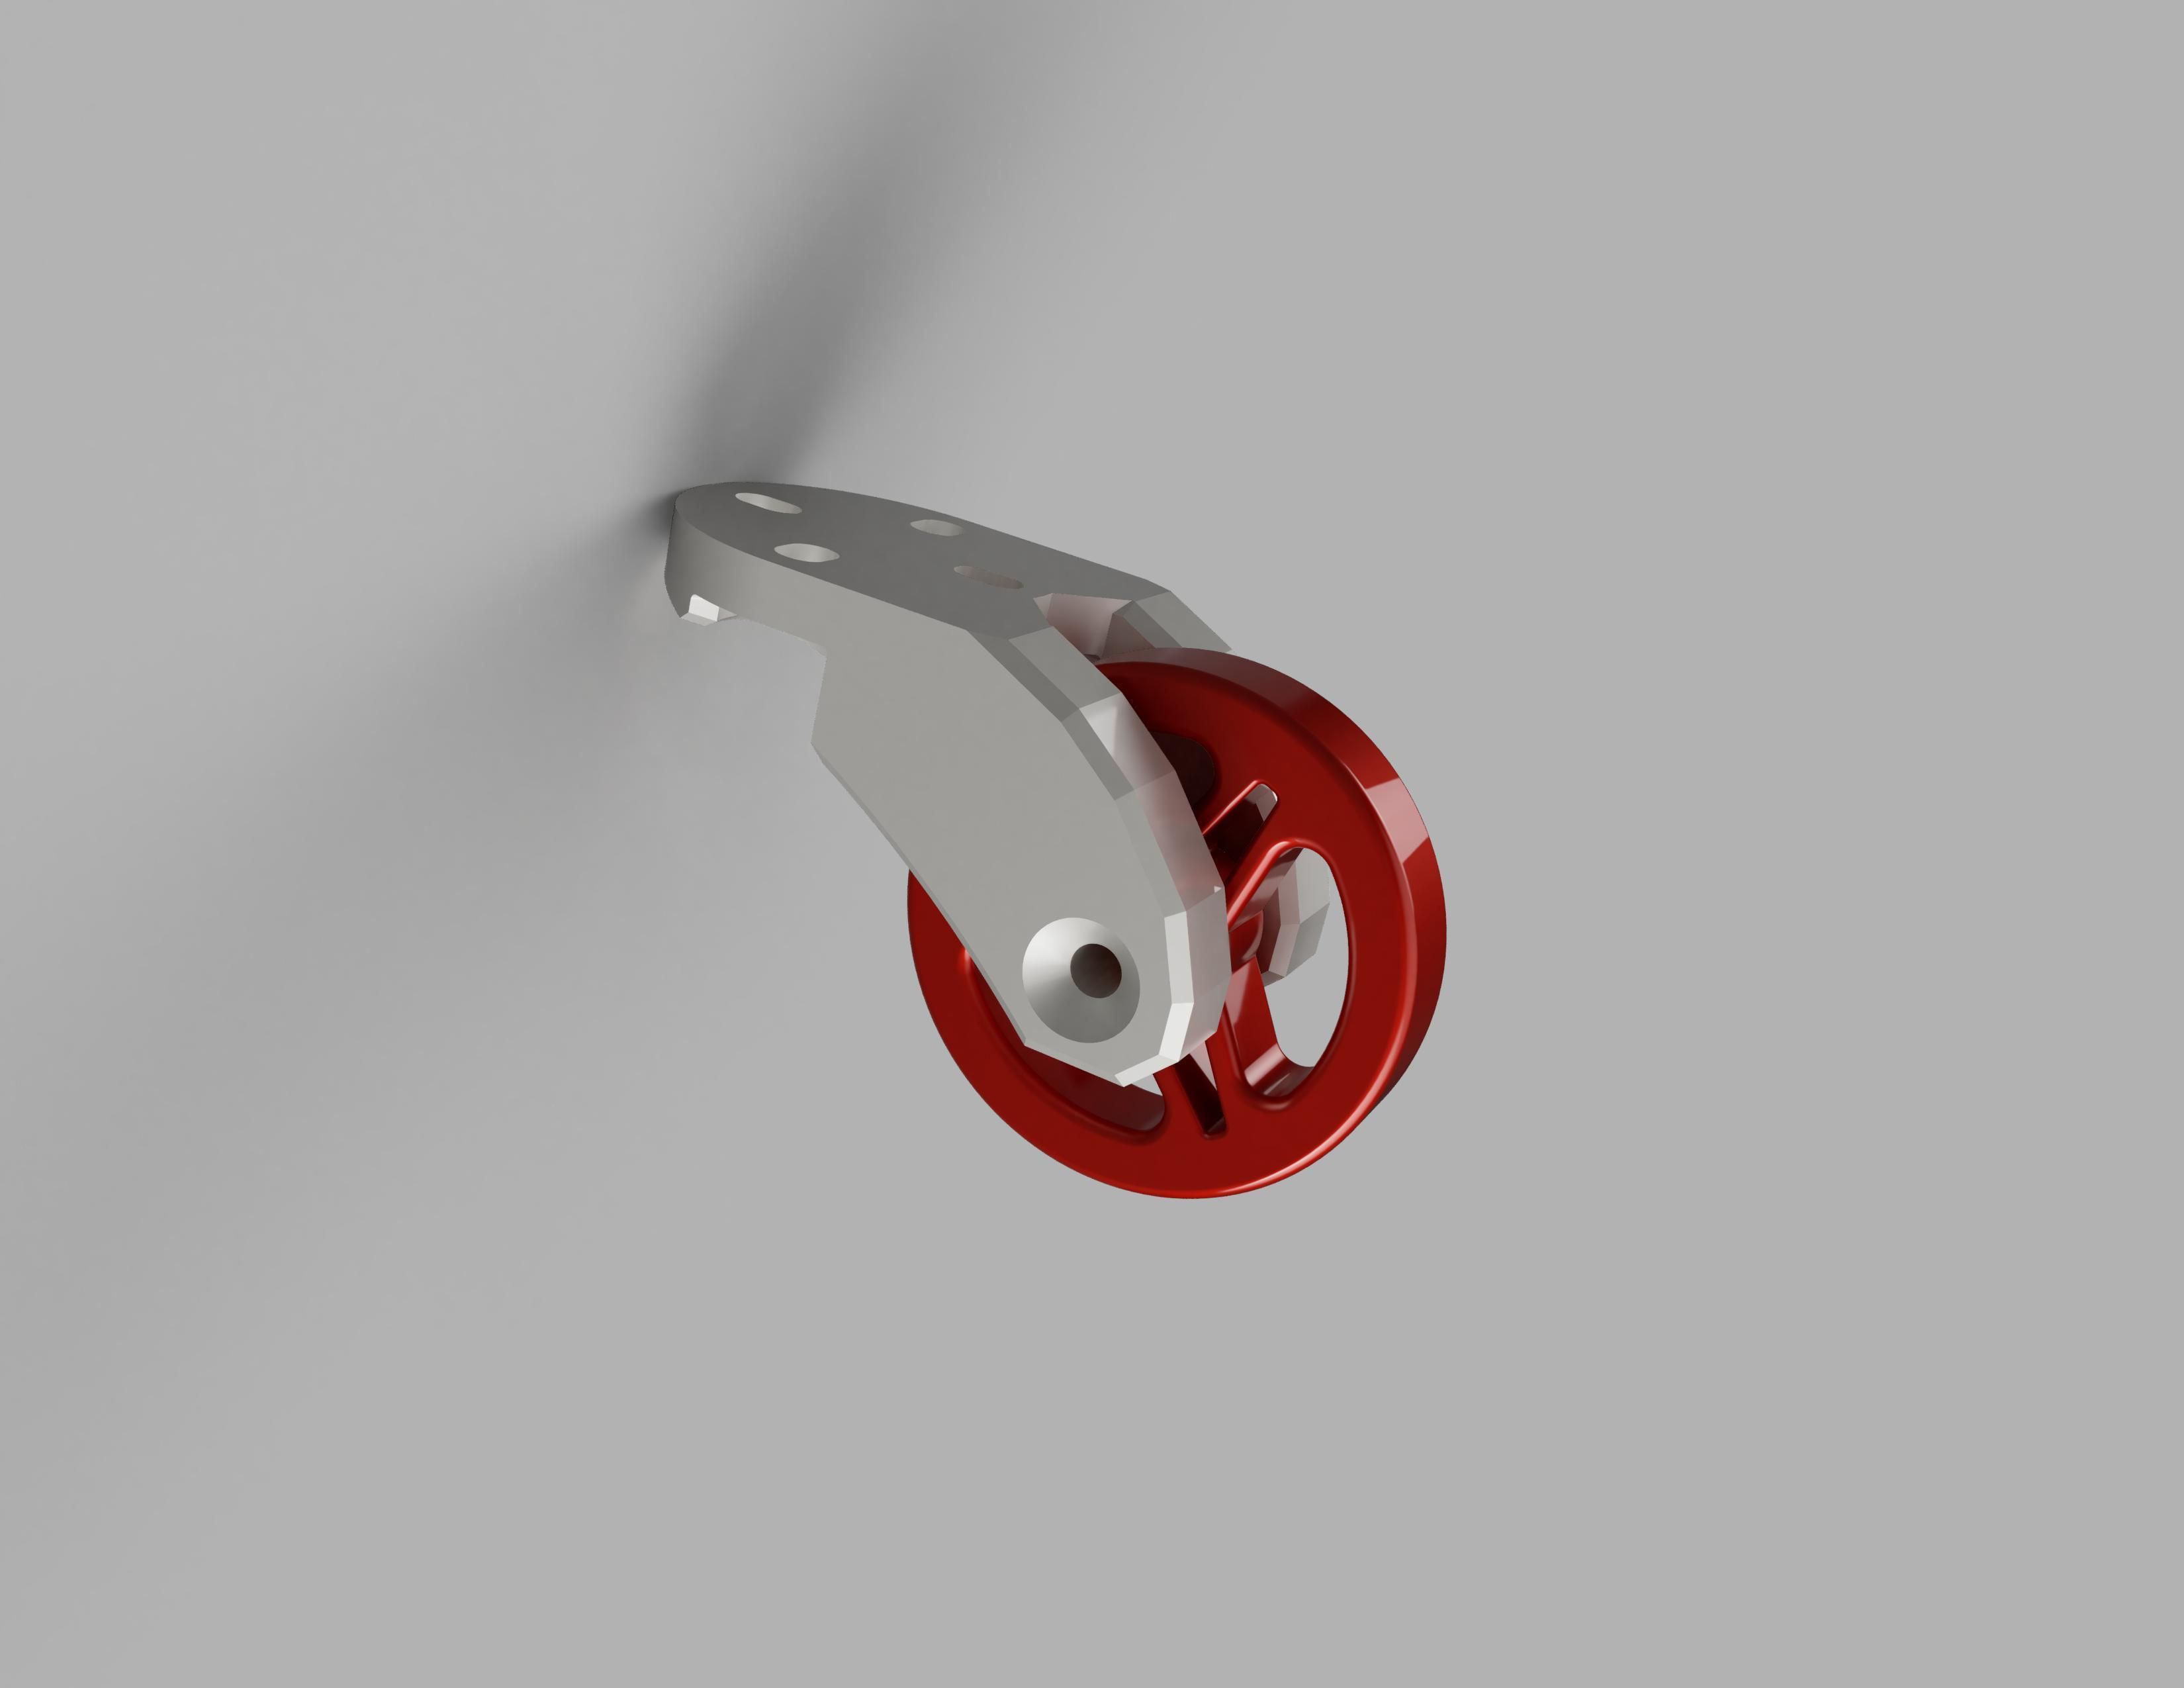 a6689149-1c83-4414-a881-287b742c5be8.JPEG Download free STL file FlyTime Quadcopter Skate Park Kit Wheels • 3D print model, Printfully3d